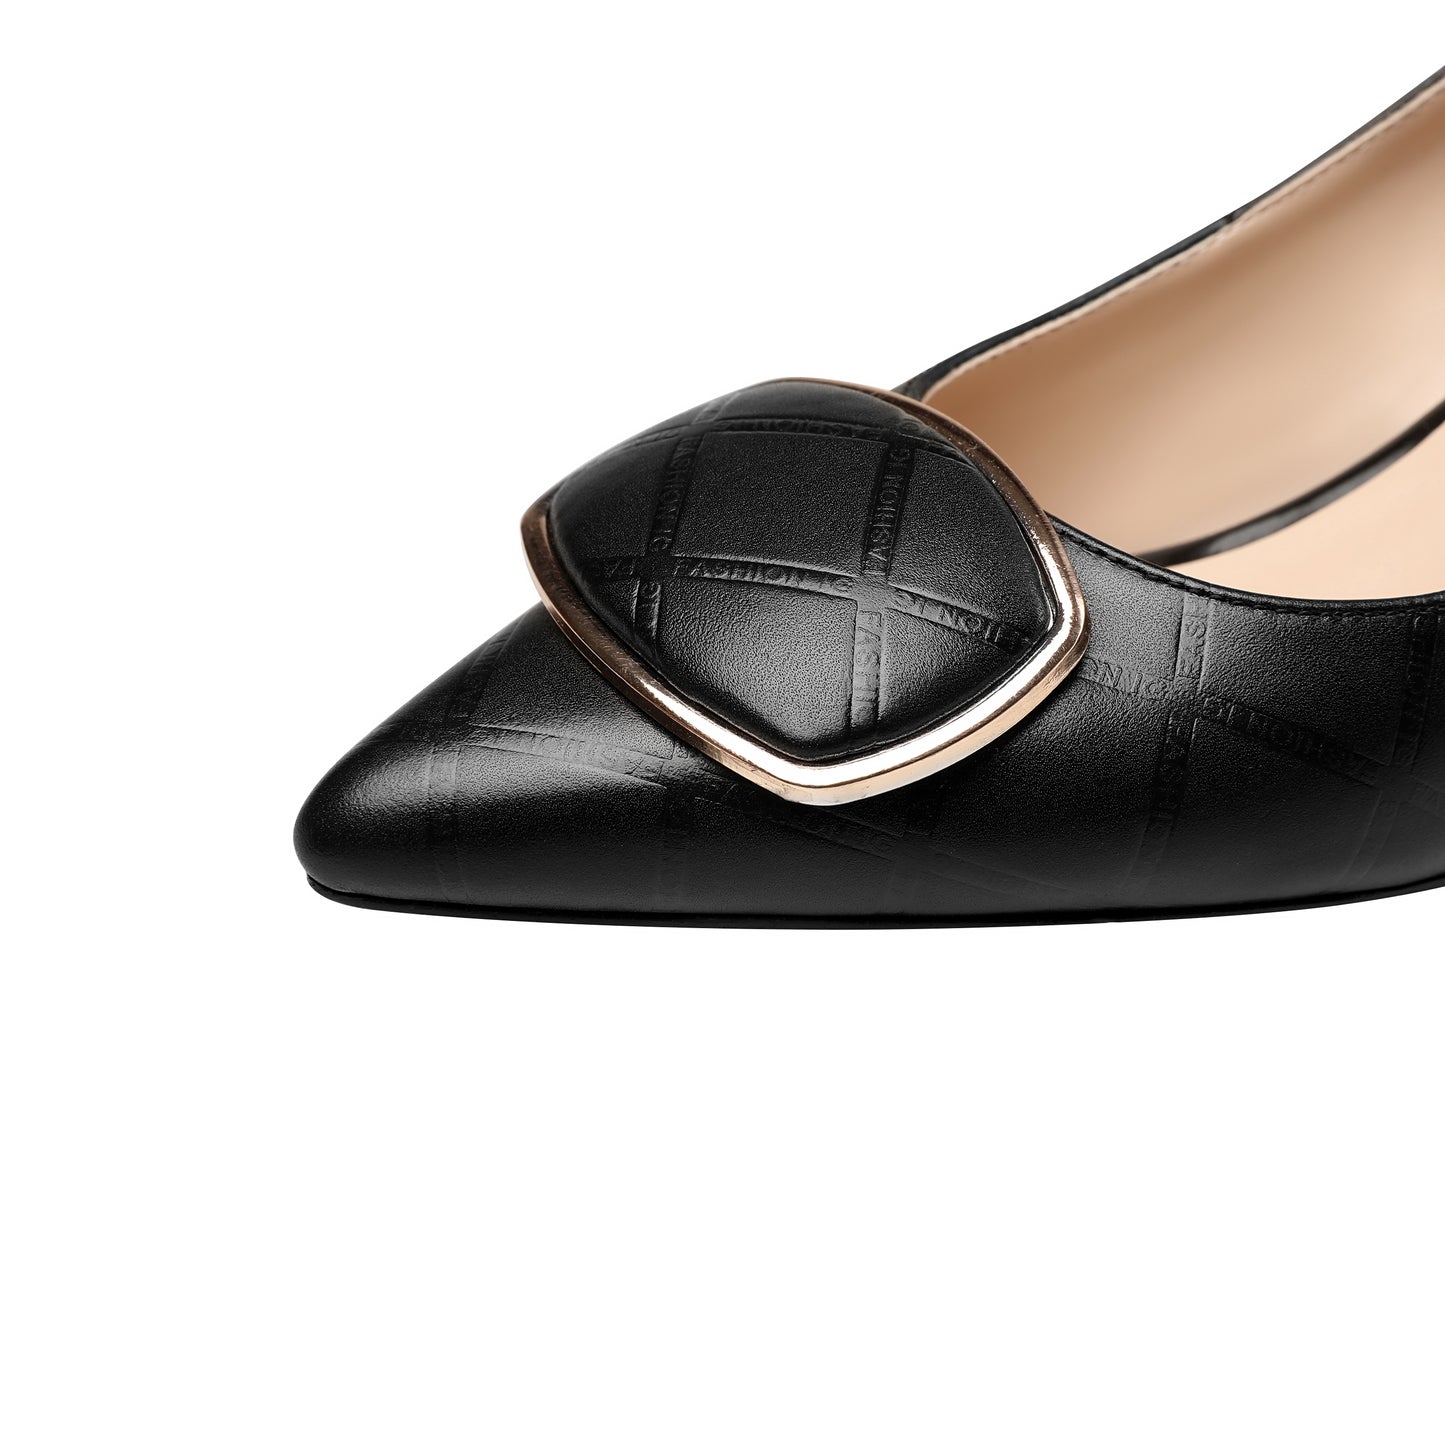 TinaCus Genuine Leather Handmade Women's Low Block Heel Pointed Toe Graceful Pump Shoes